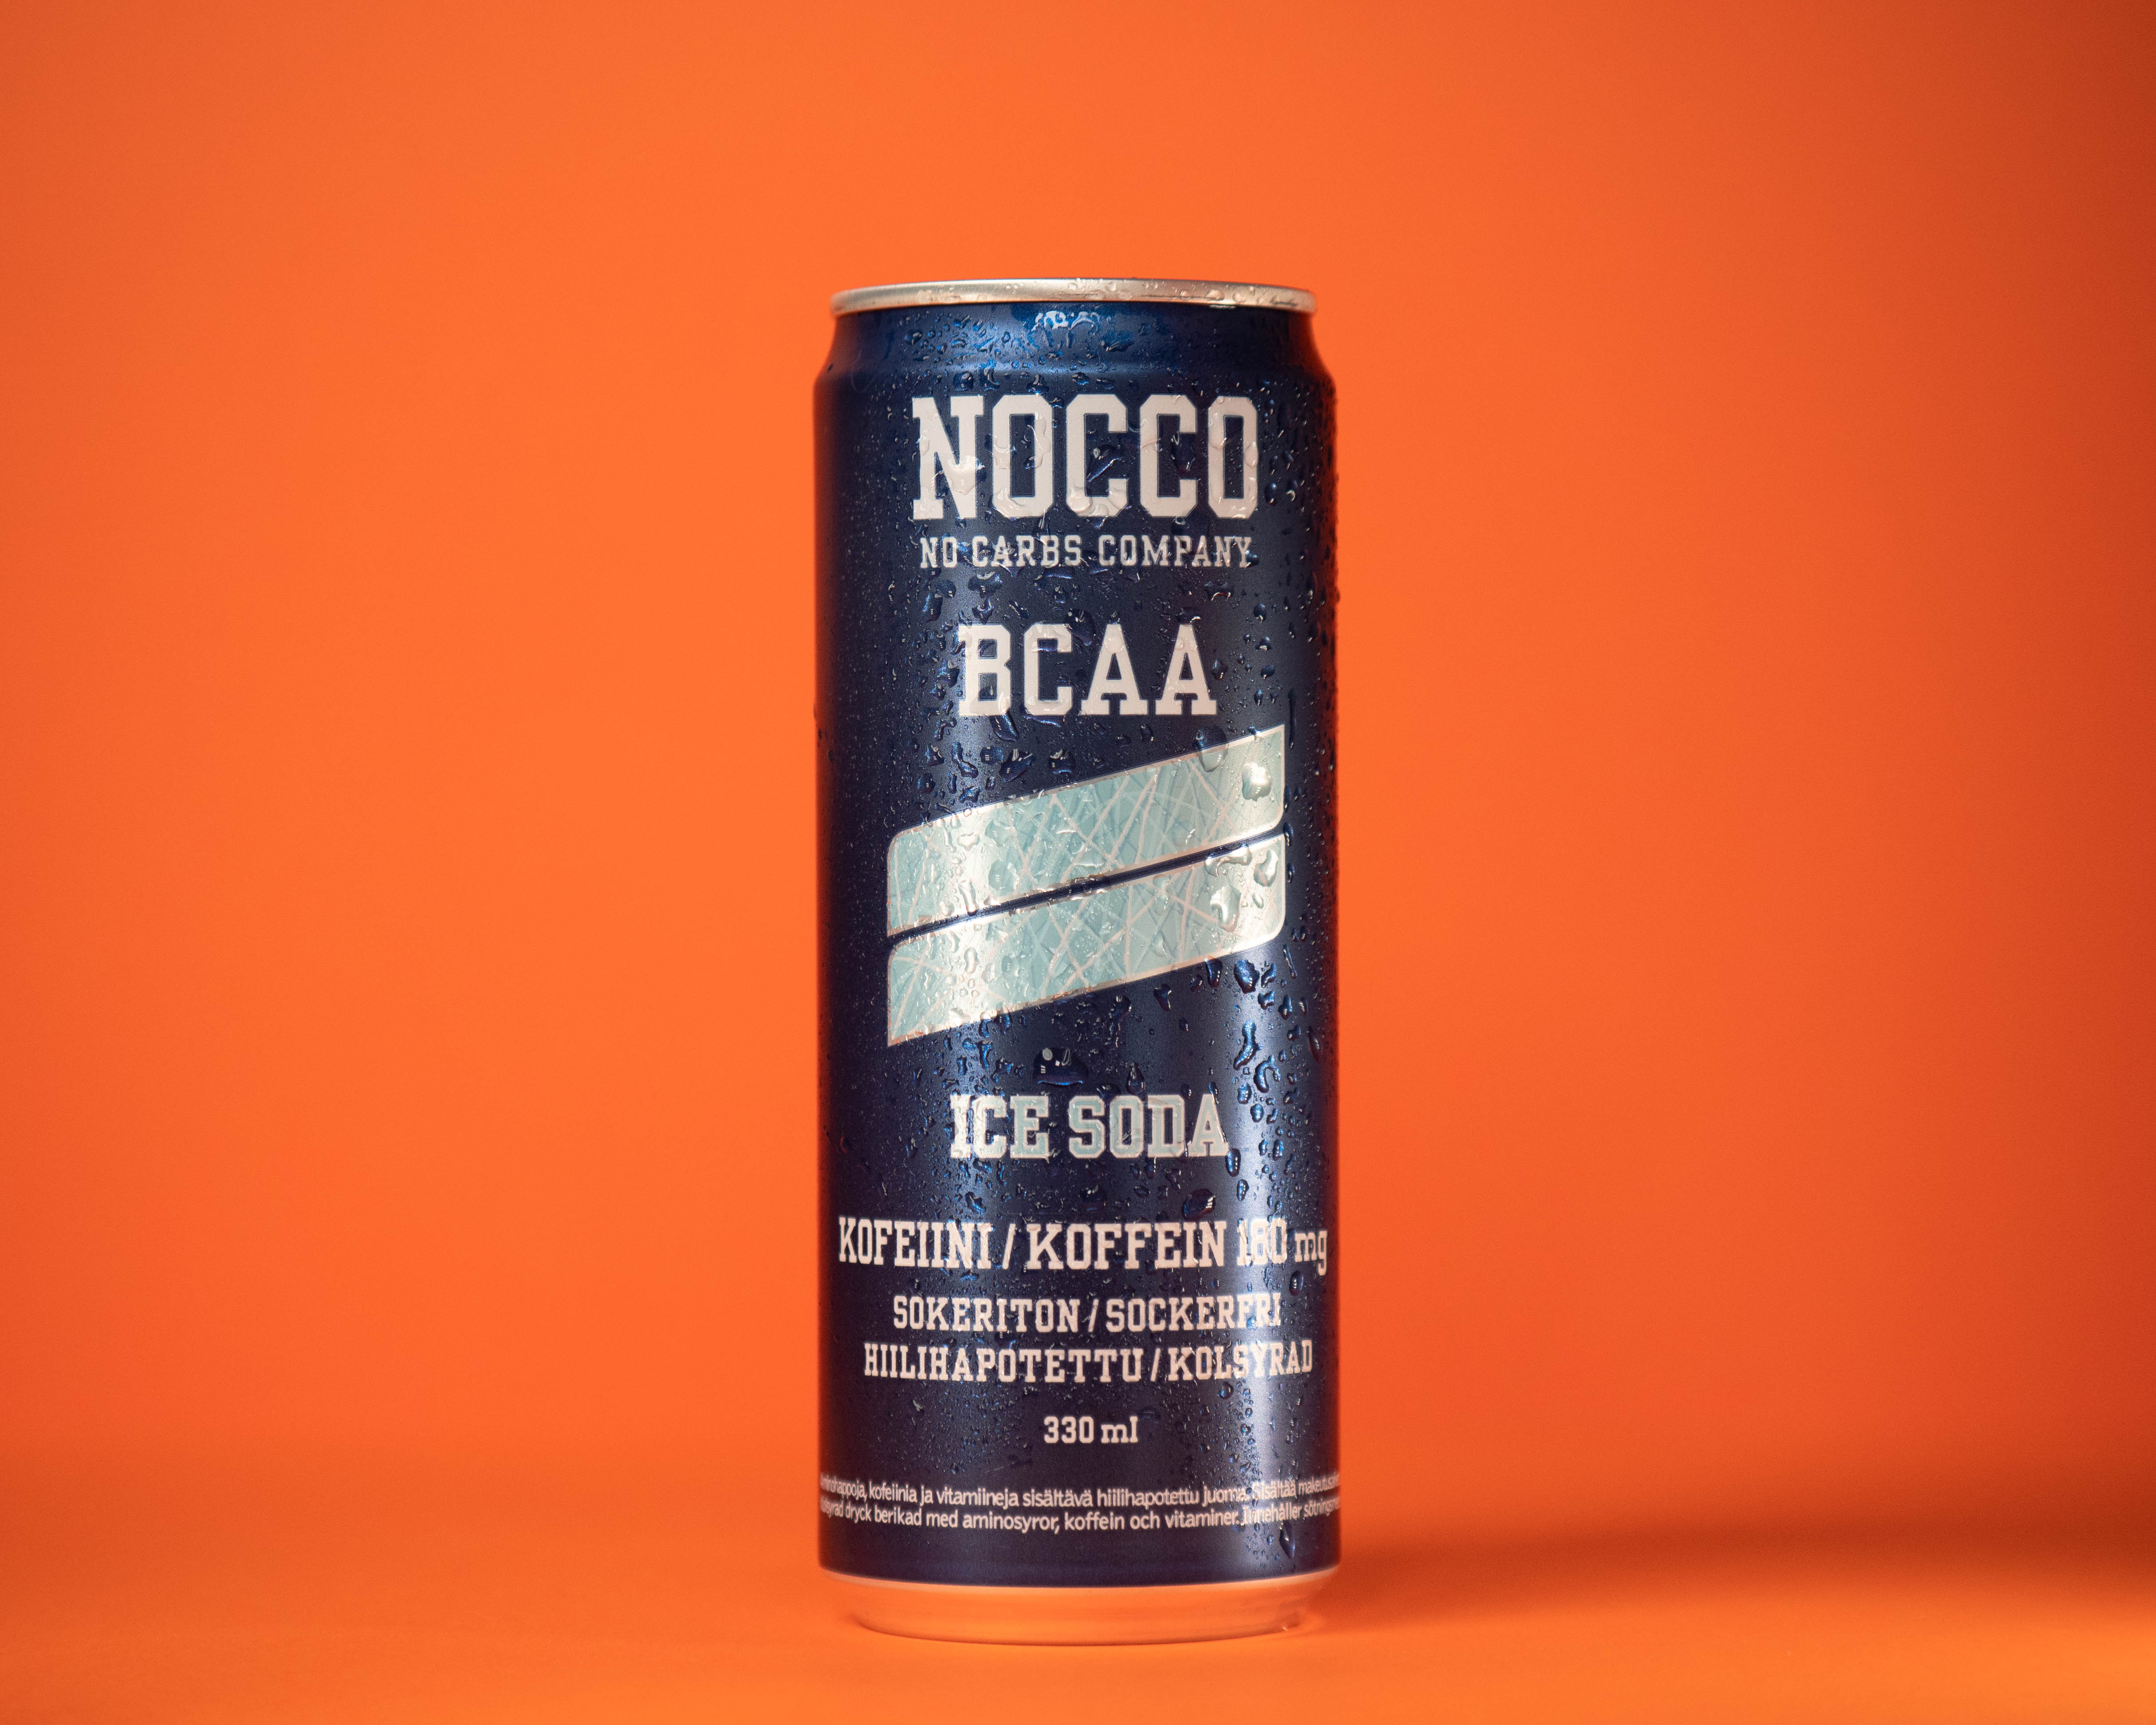 Nocco Ice soda BCAA can